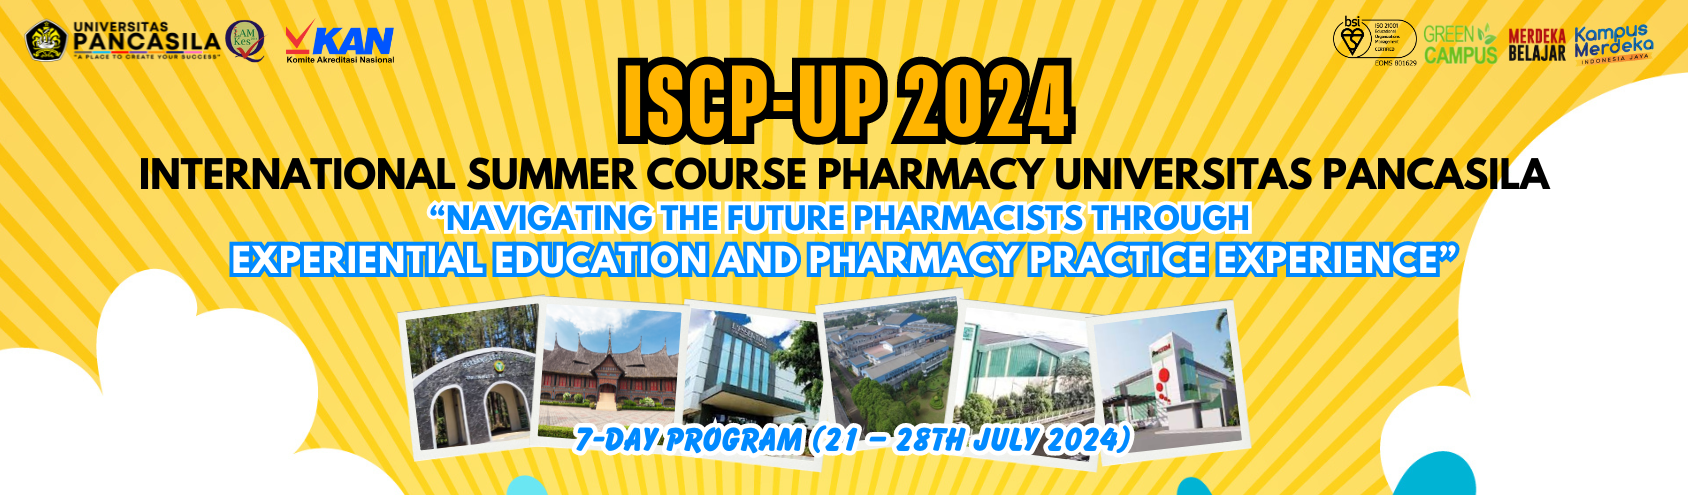 Opening International Summer Course Pharmacy (ISCP) 2024 : Kegiatan FFUP Diikuti Mahasiswa Berbagai Negara